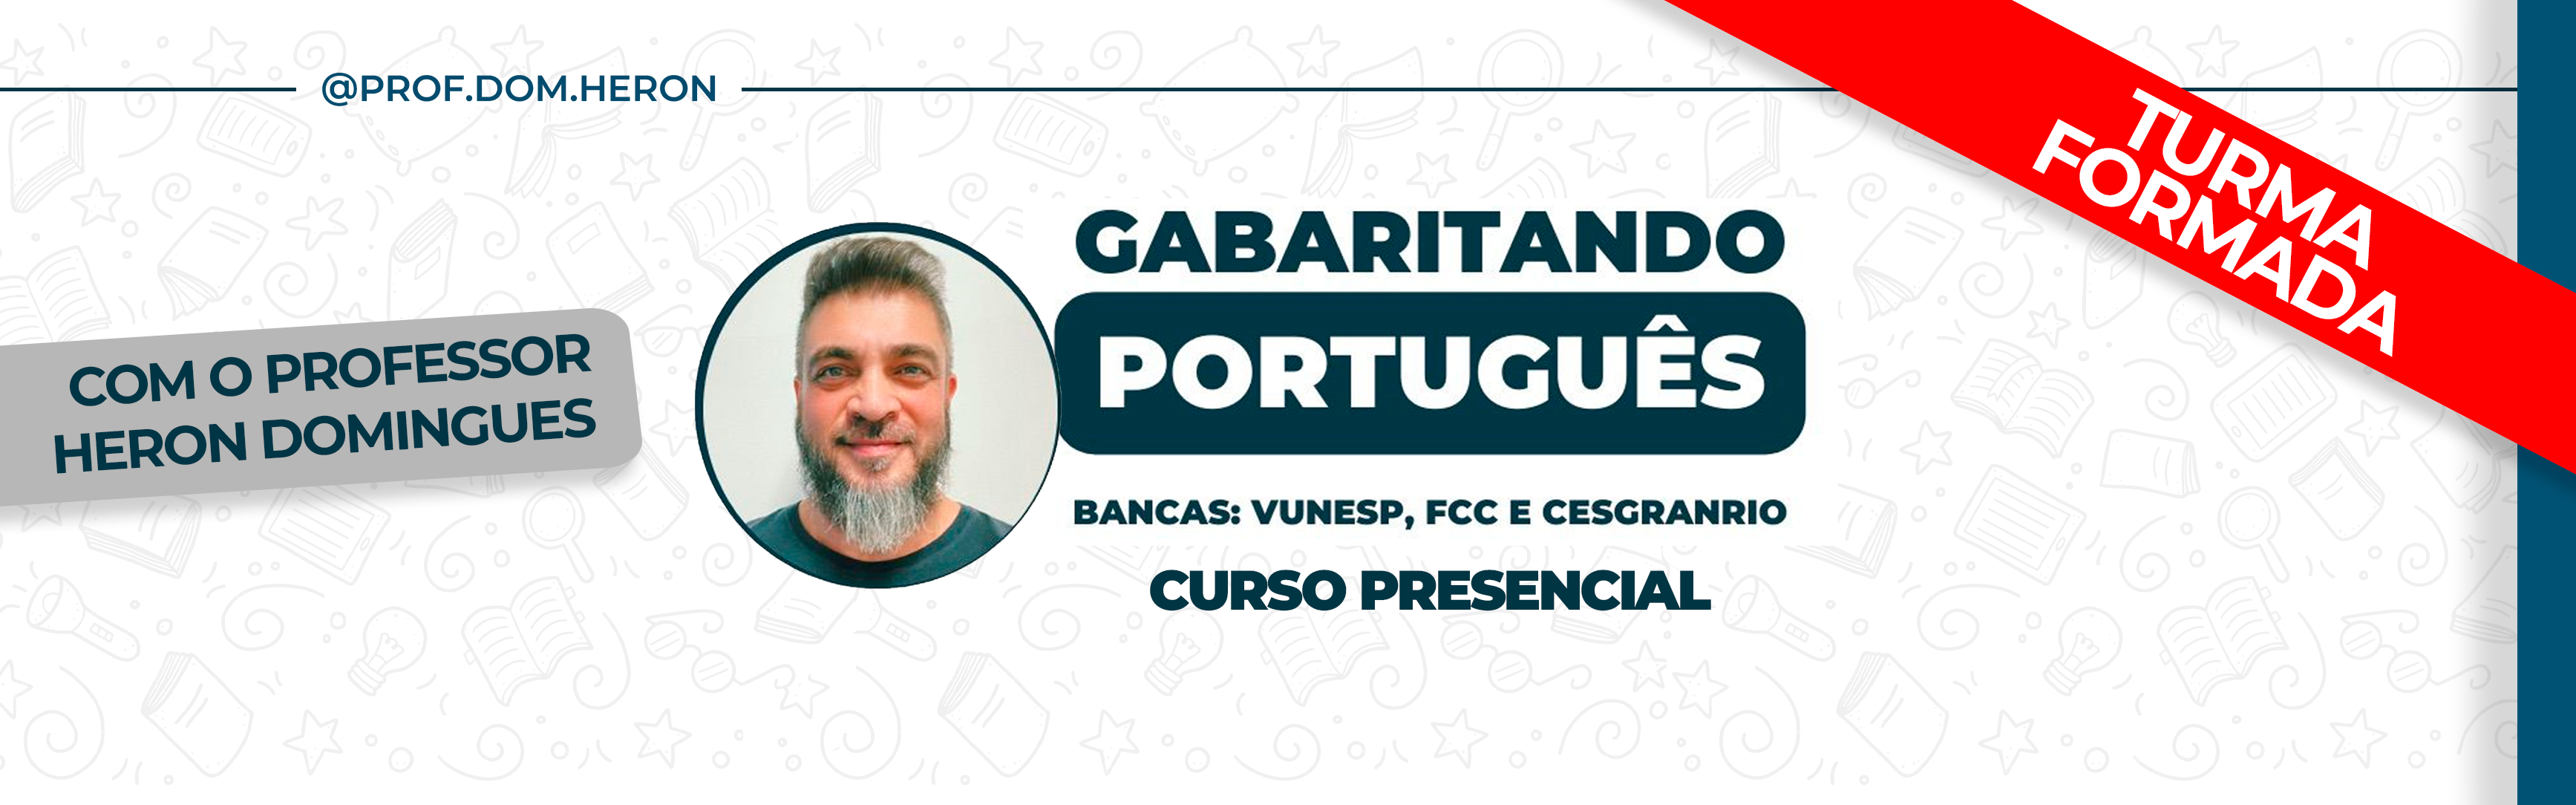 gabaritando portugues